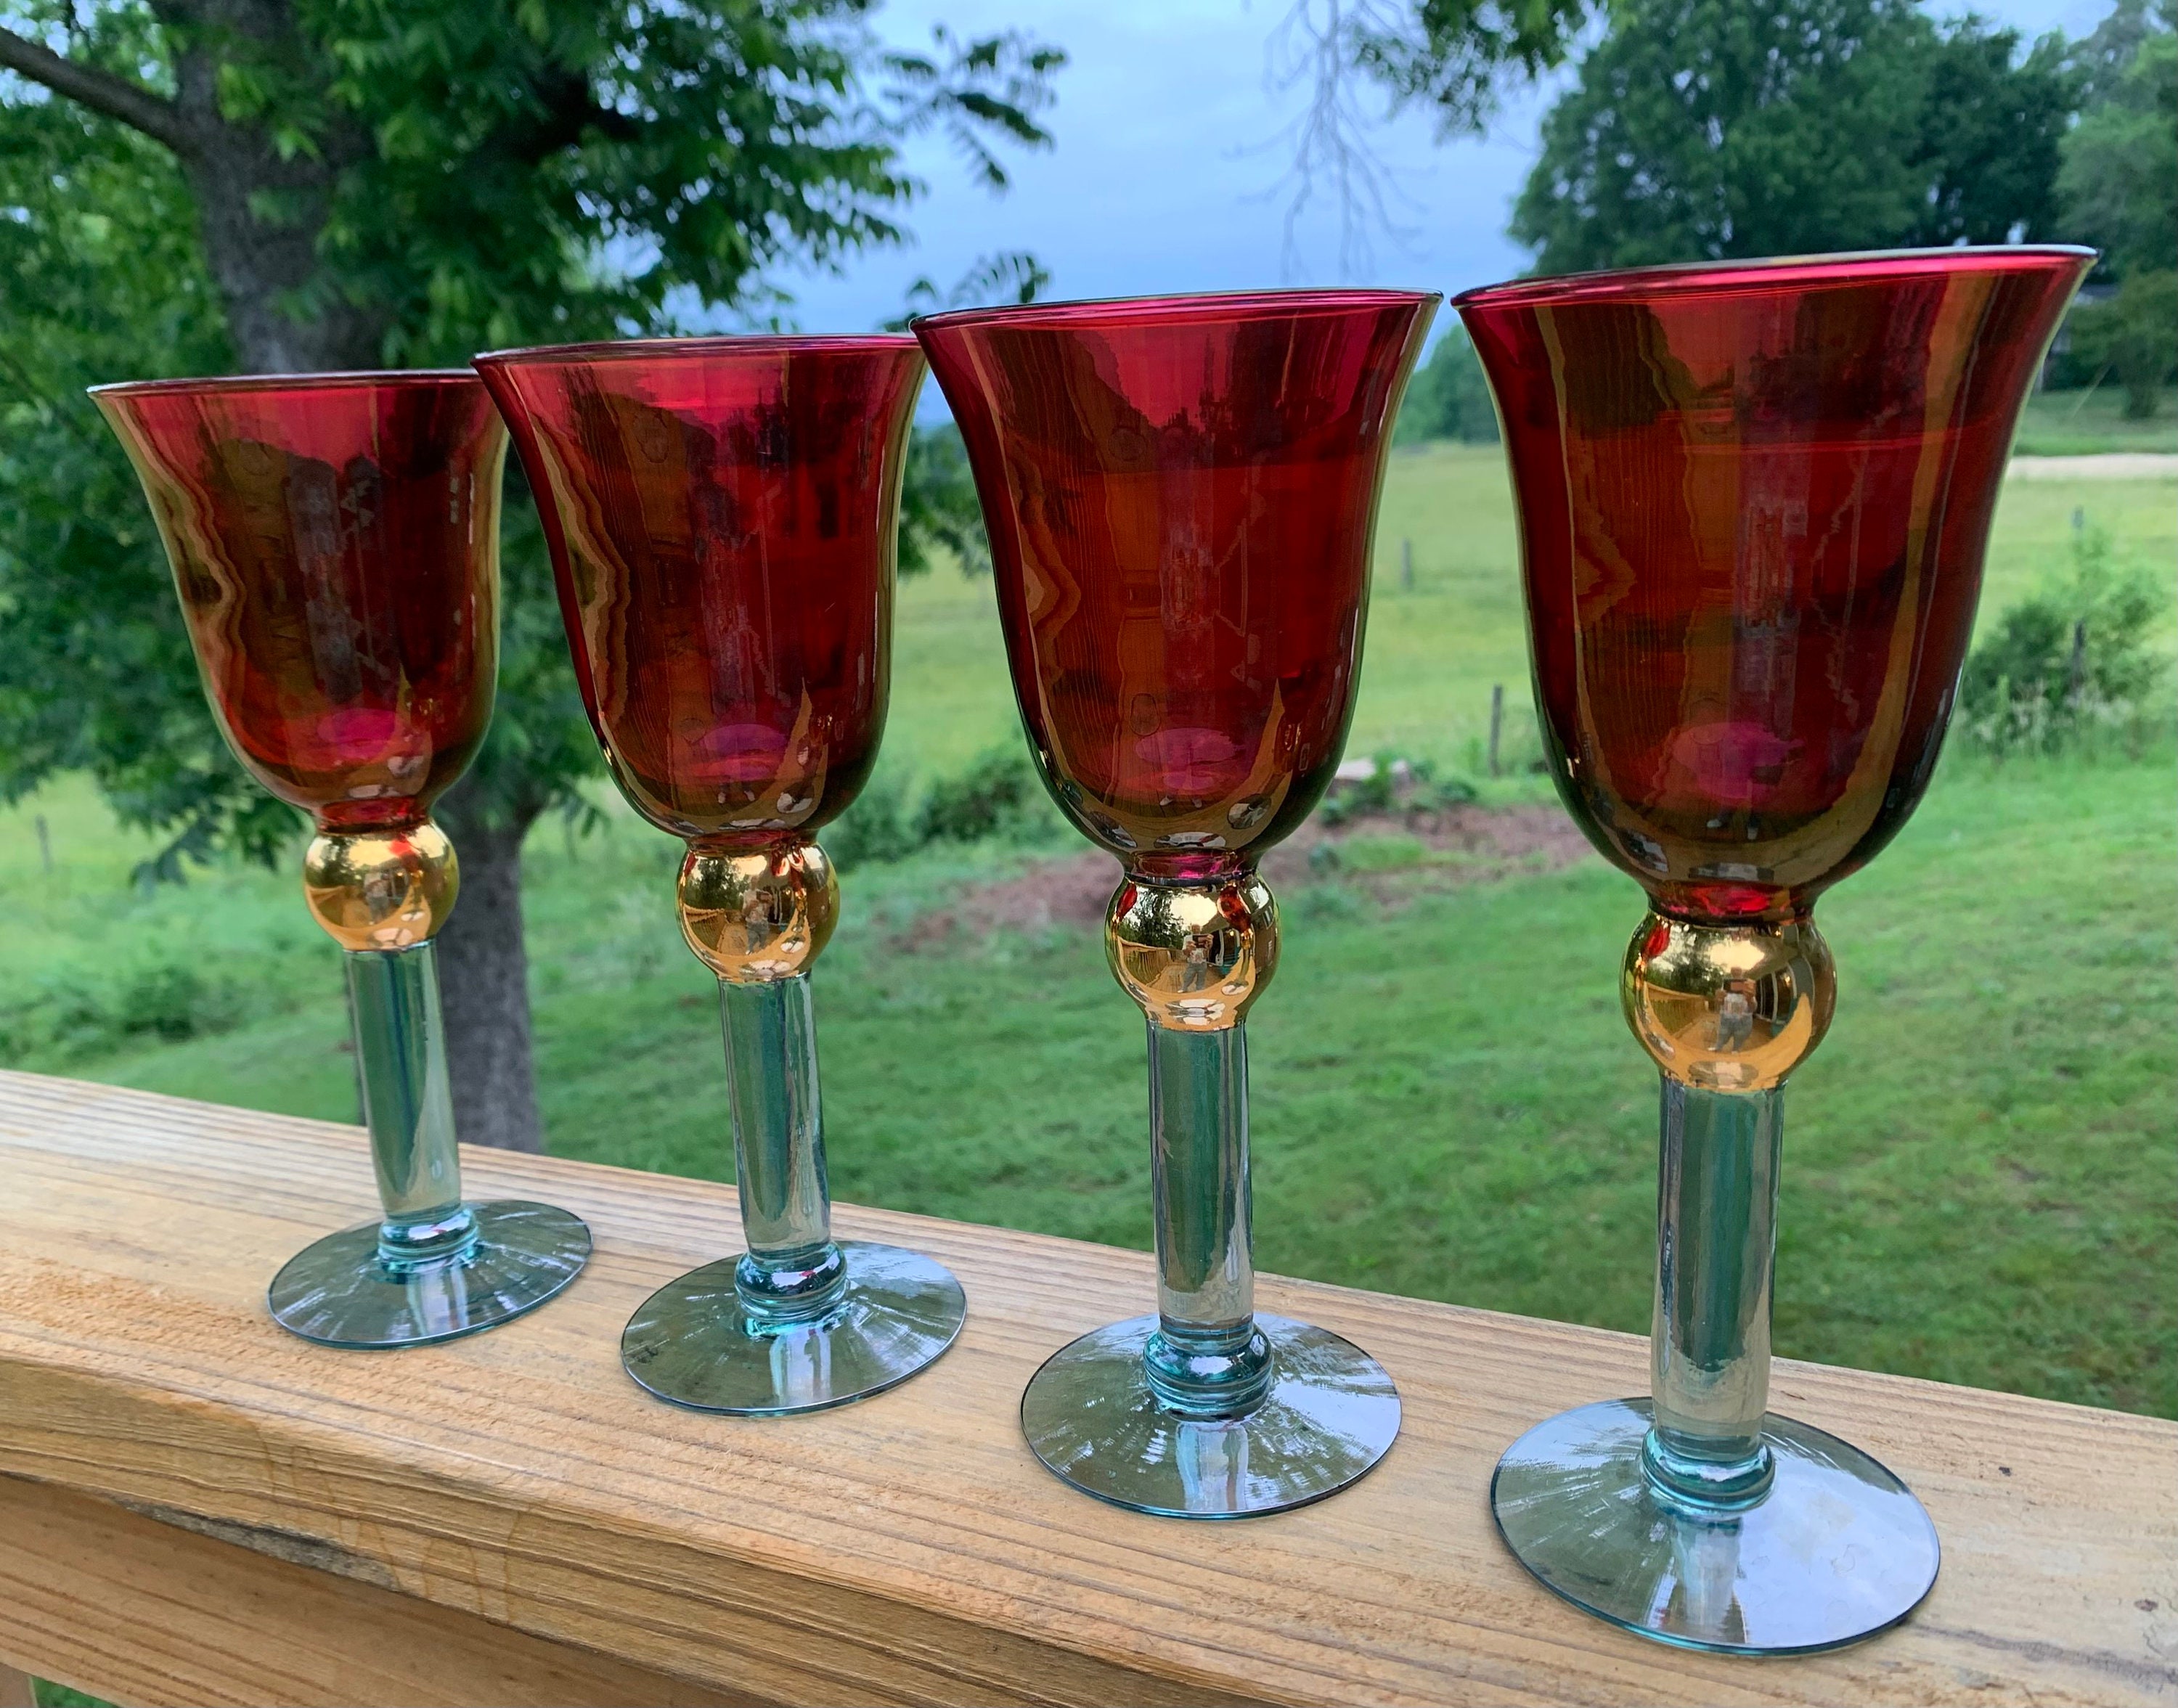 Stem Wine Glasses Sagaform Gold Club Cocktail Glasses Paired Drinkware